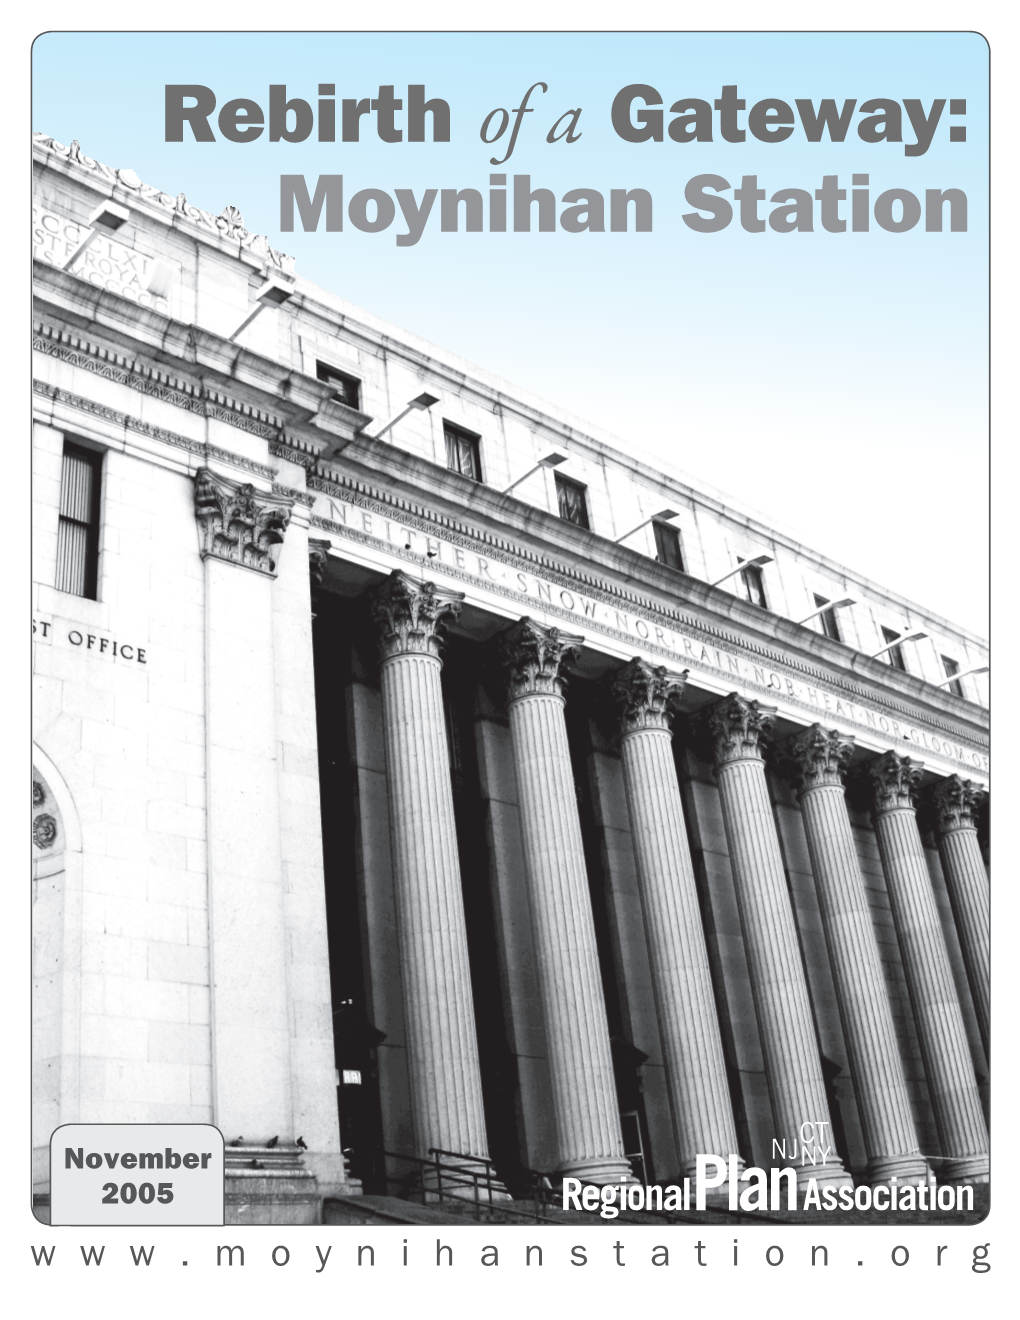 Moynihan Station